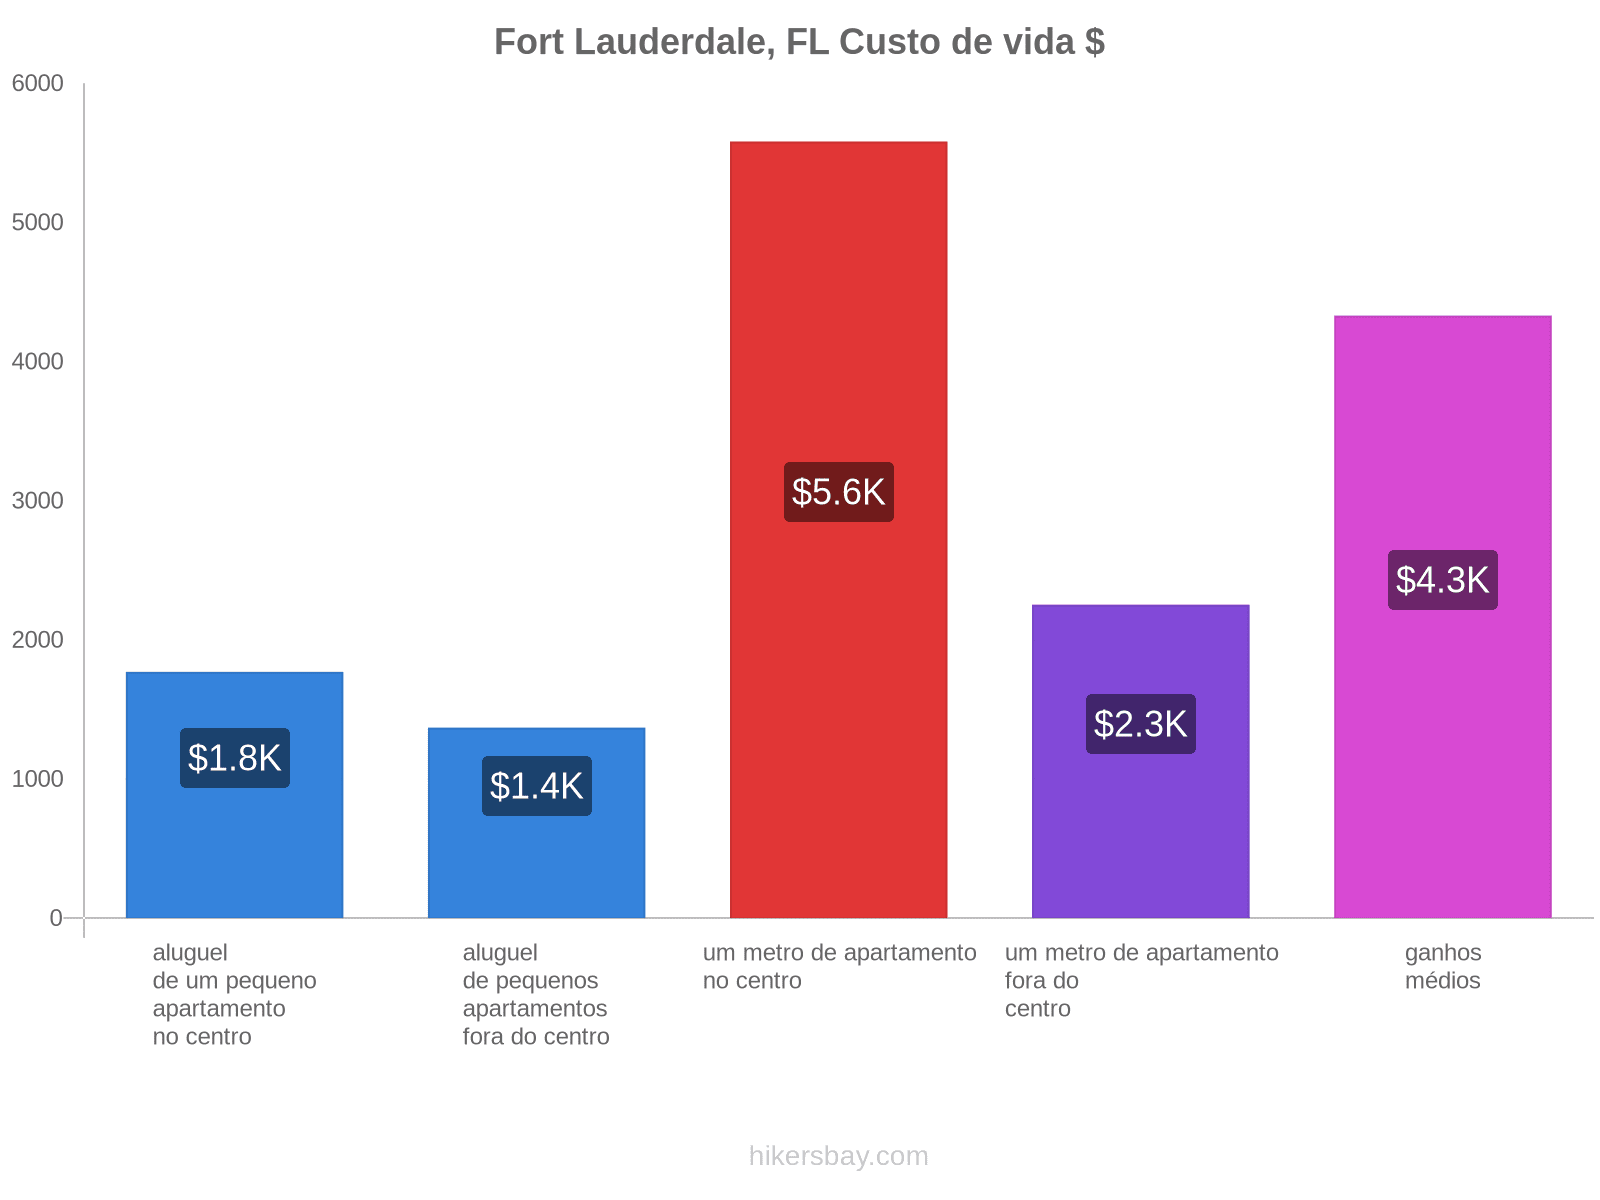 Fort Lauderdale, FL custo de vida hikersbay.com